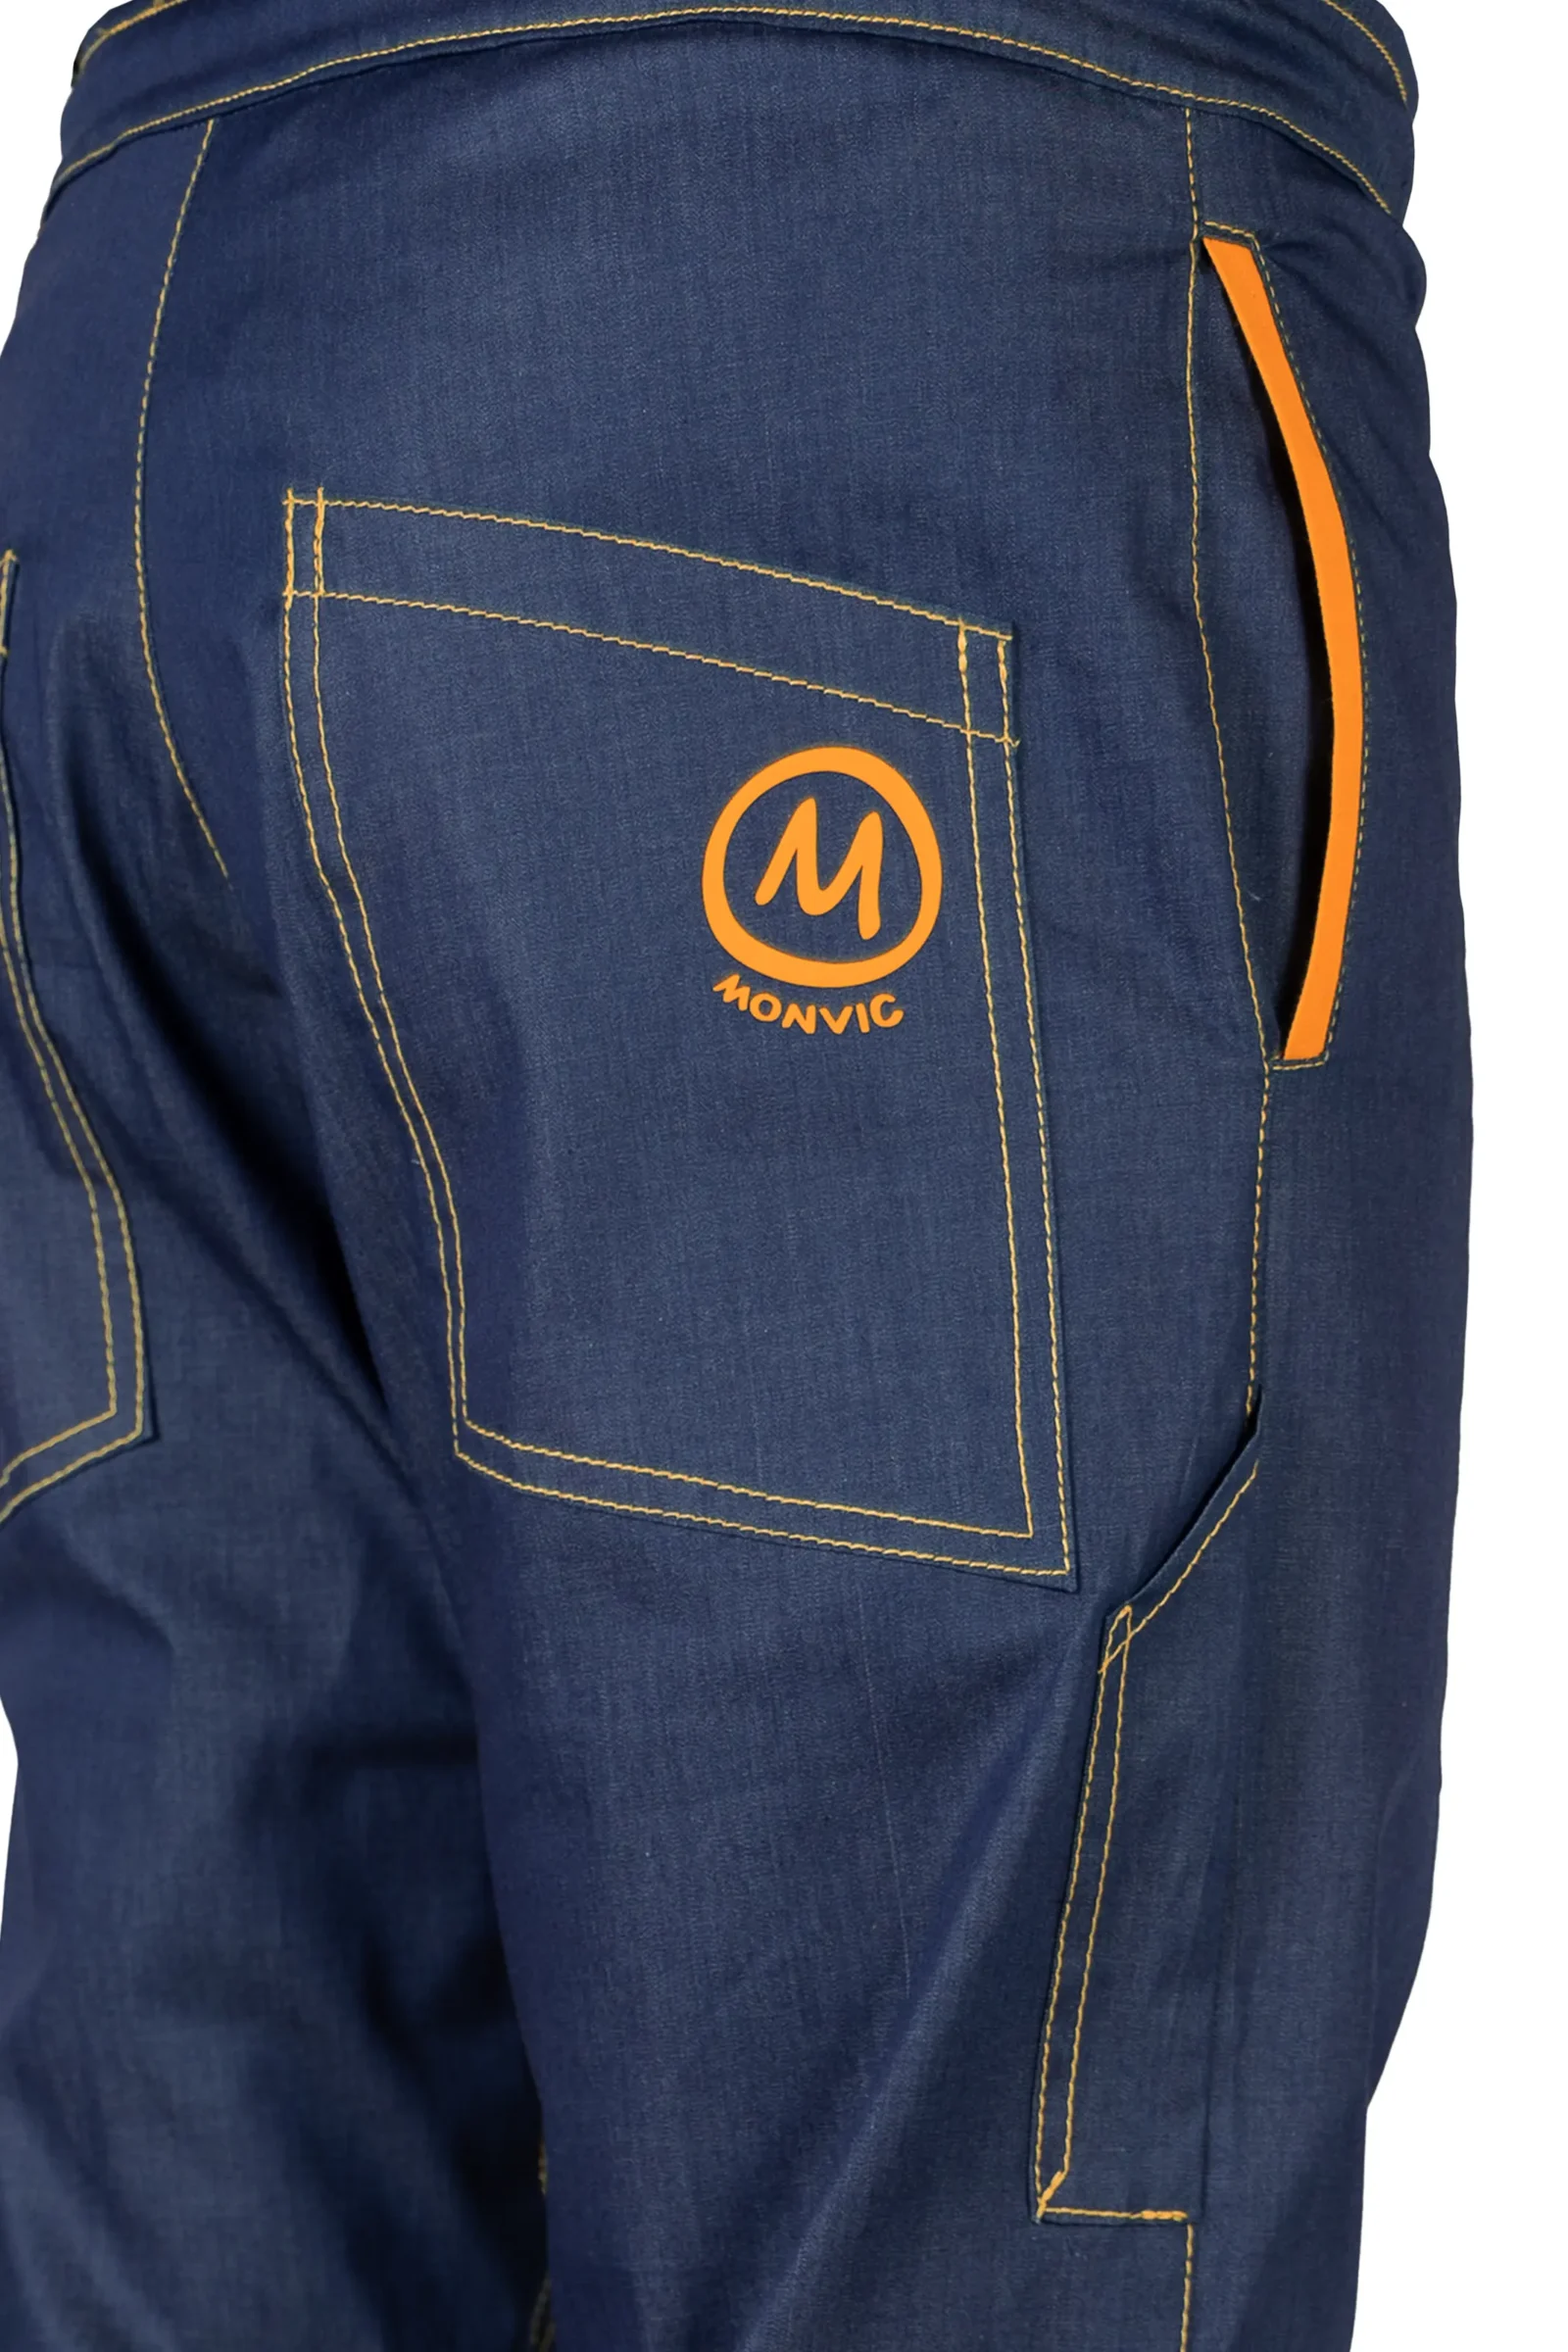 Men's climbing jeans - denim trousers - orange stitching - GERONIMO Monvic